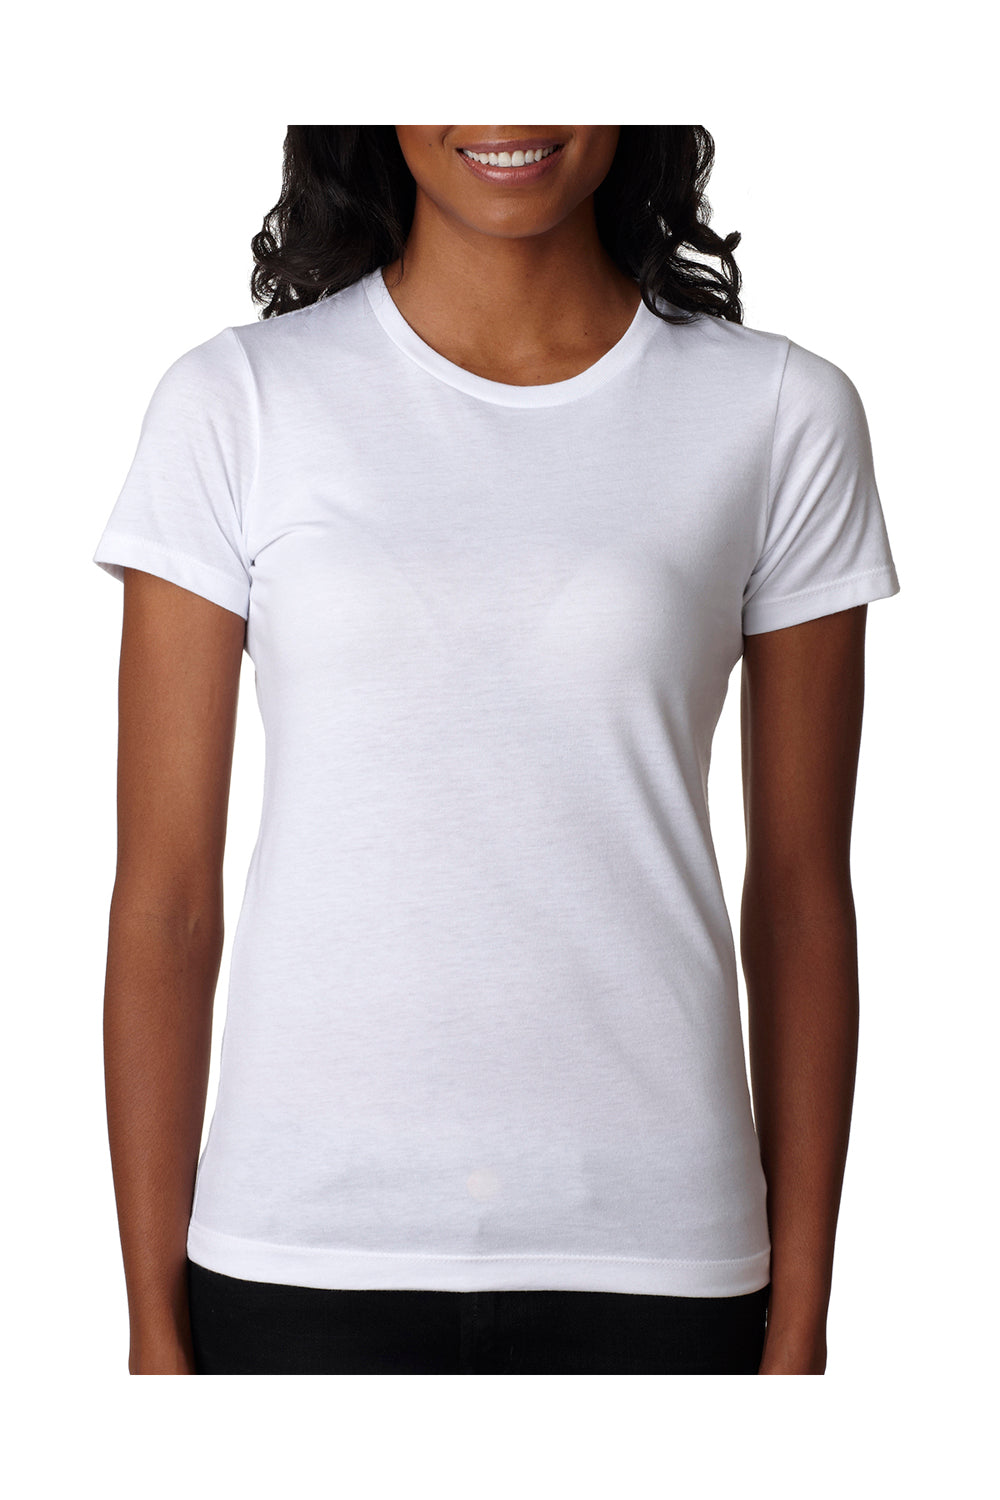 Next Level Short Sleeve T-Shirt - White